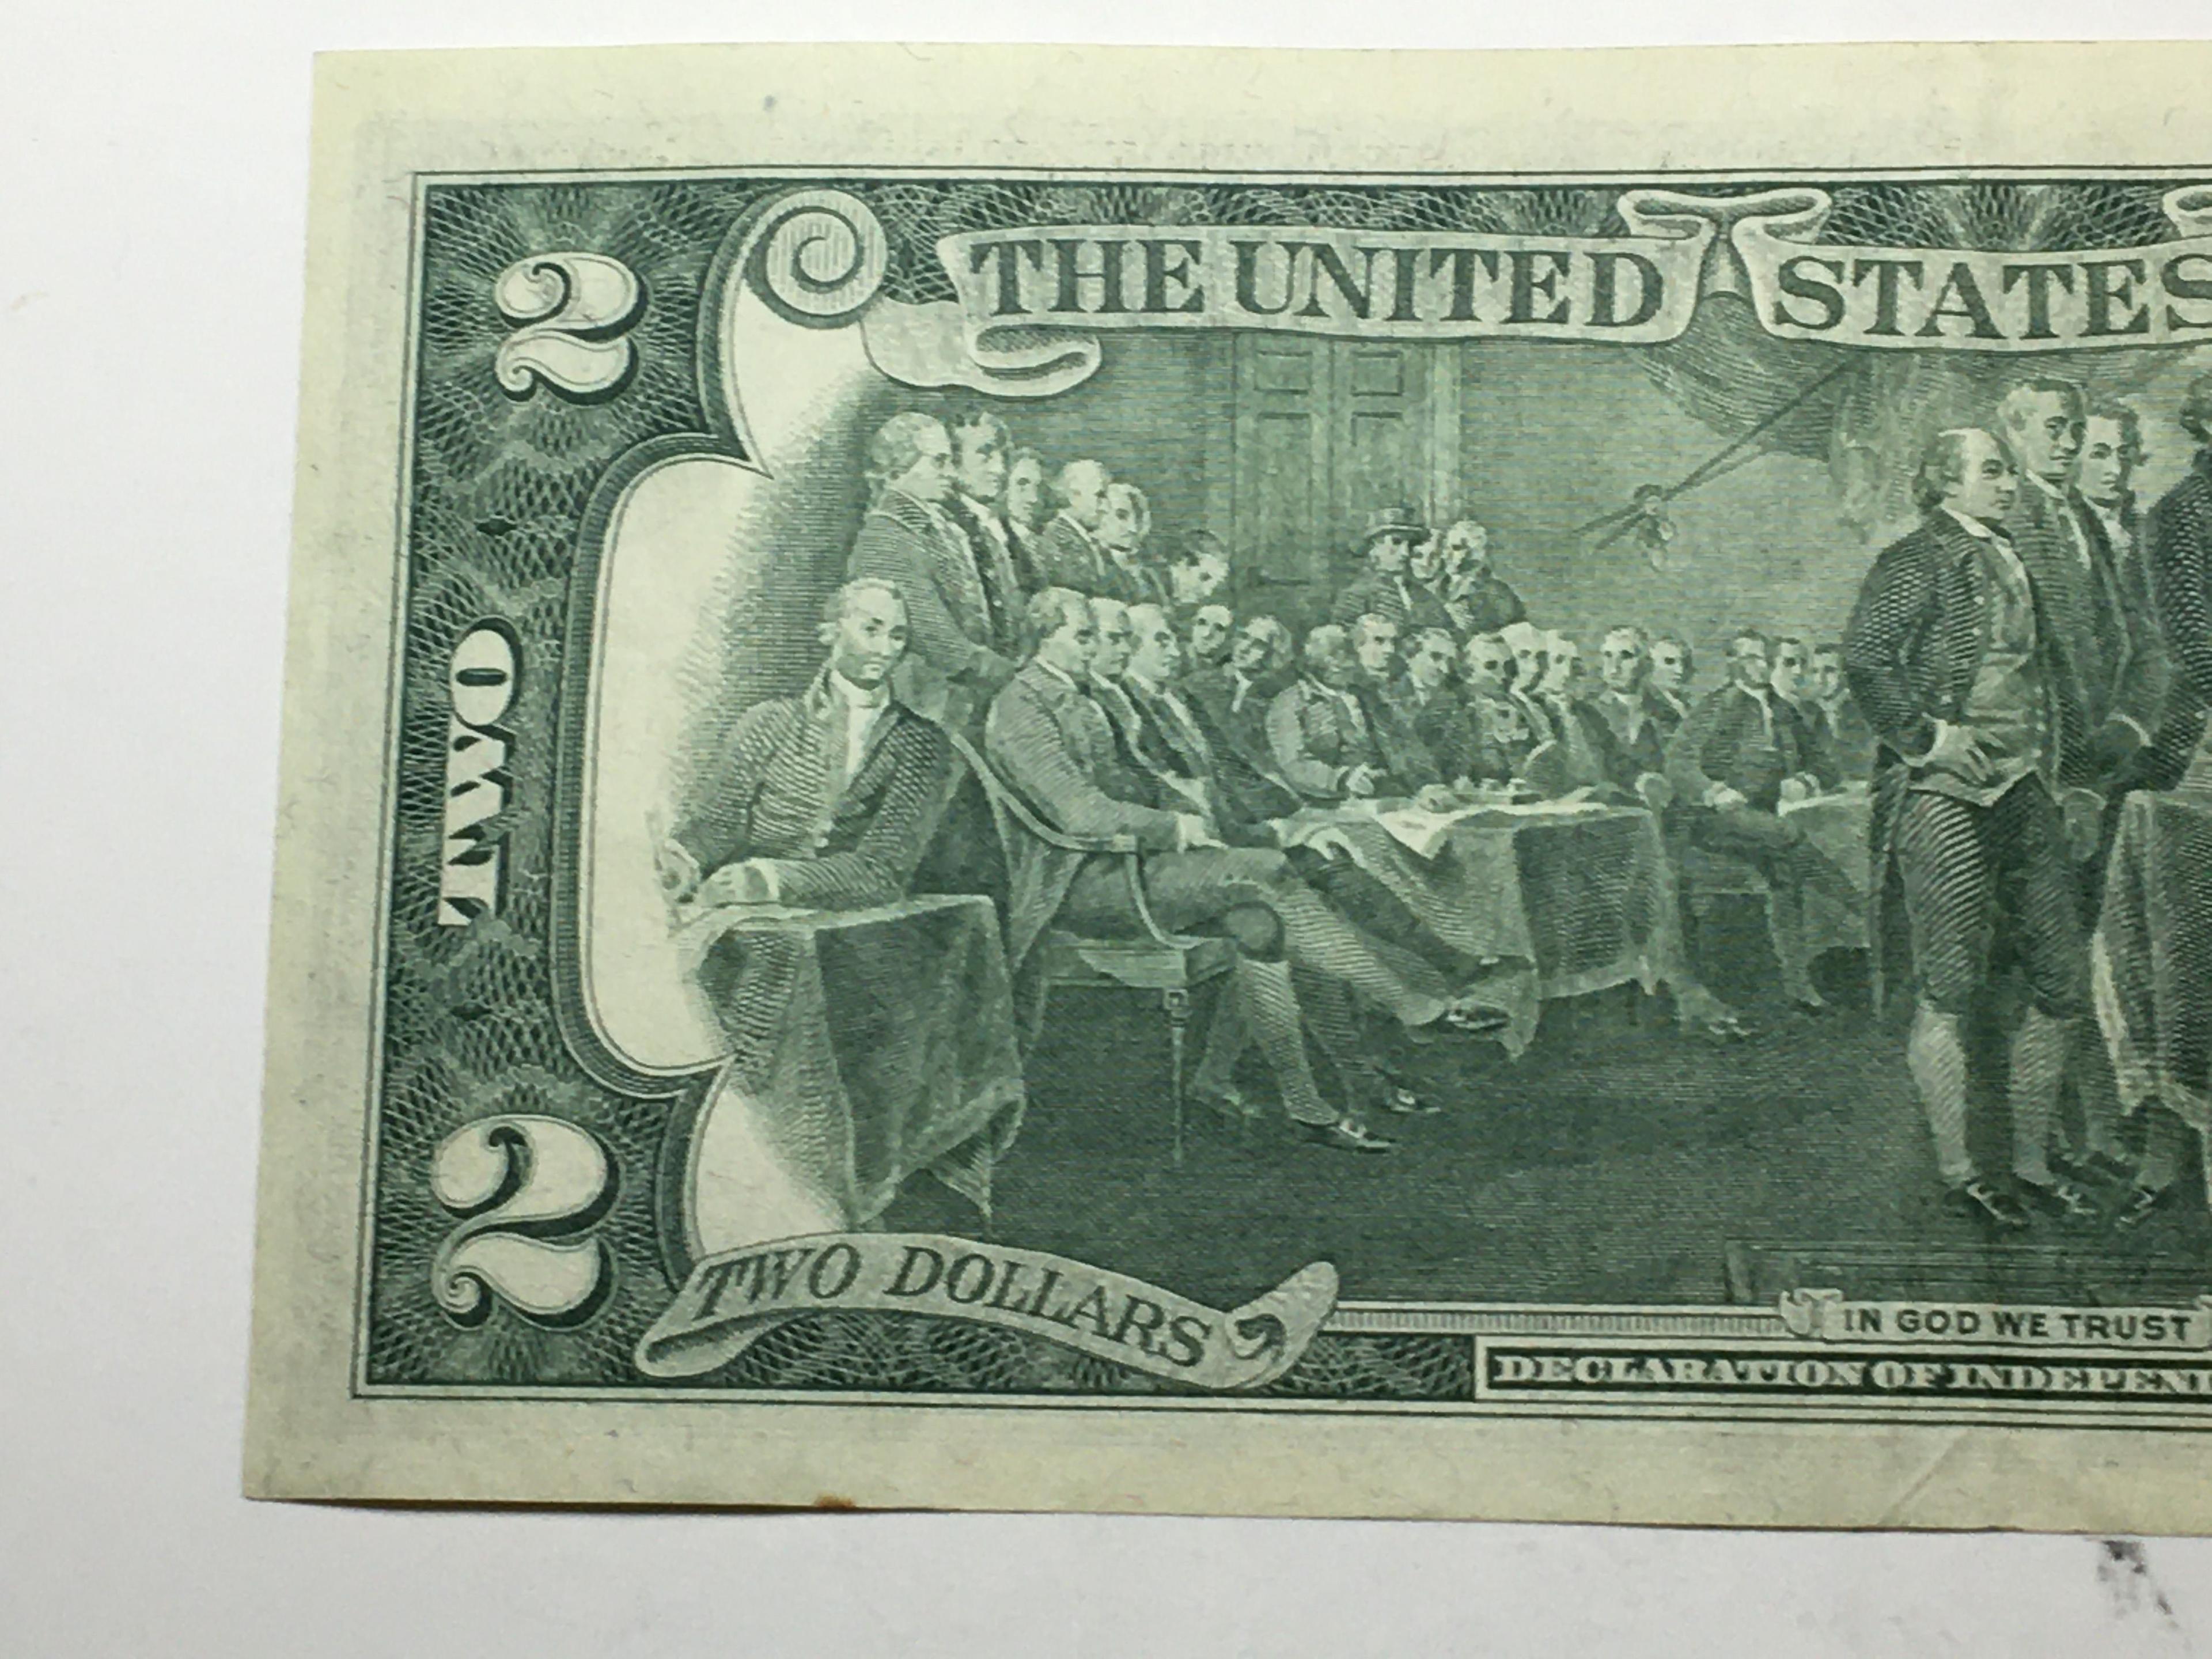 $ 2 Dollar Bill 1976 Off Cut Error